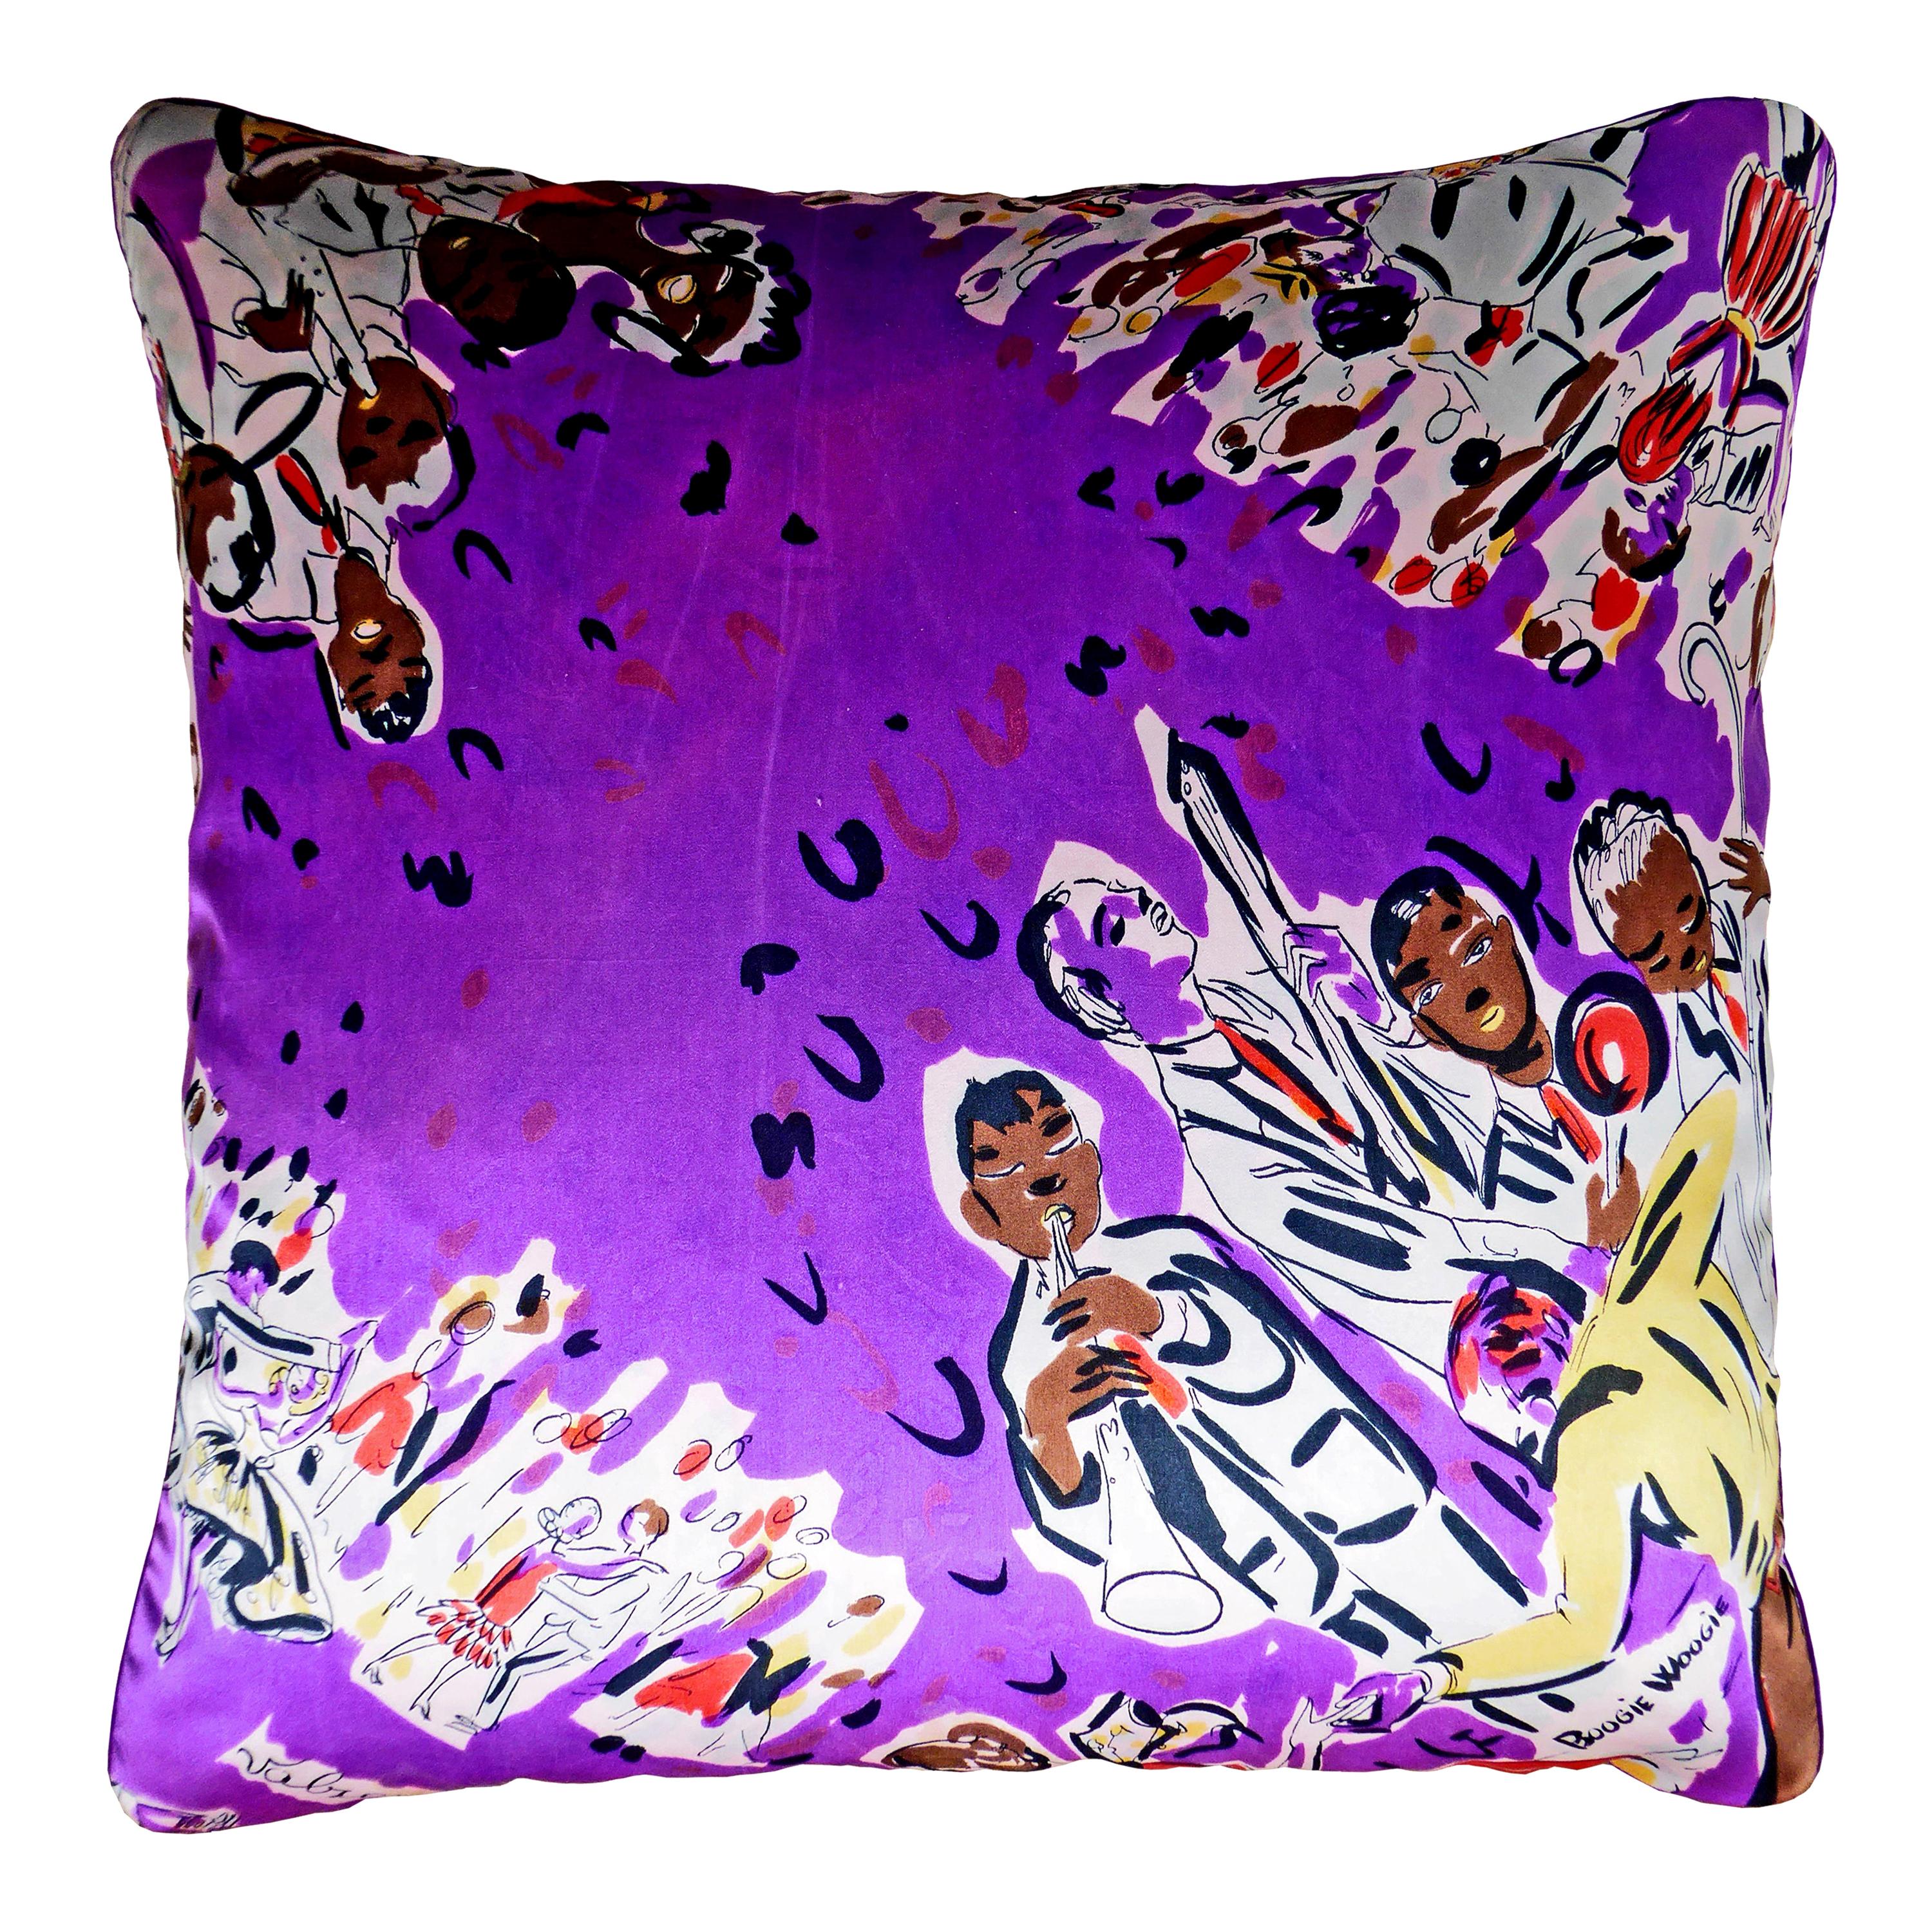 ‘Vintage Cushions’ Luxury Bespoke Silk Pillow 'Boogie Woogie', Made in London